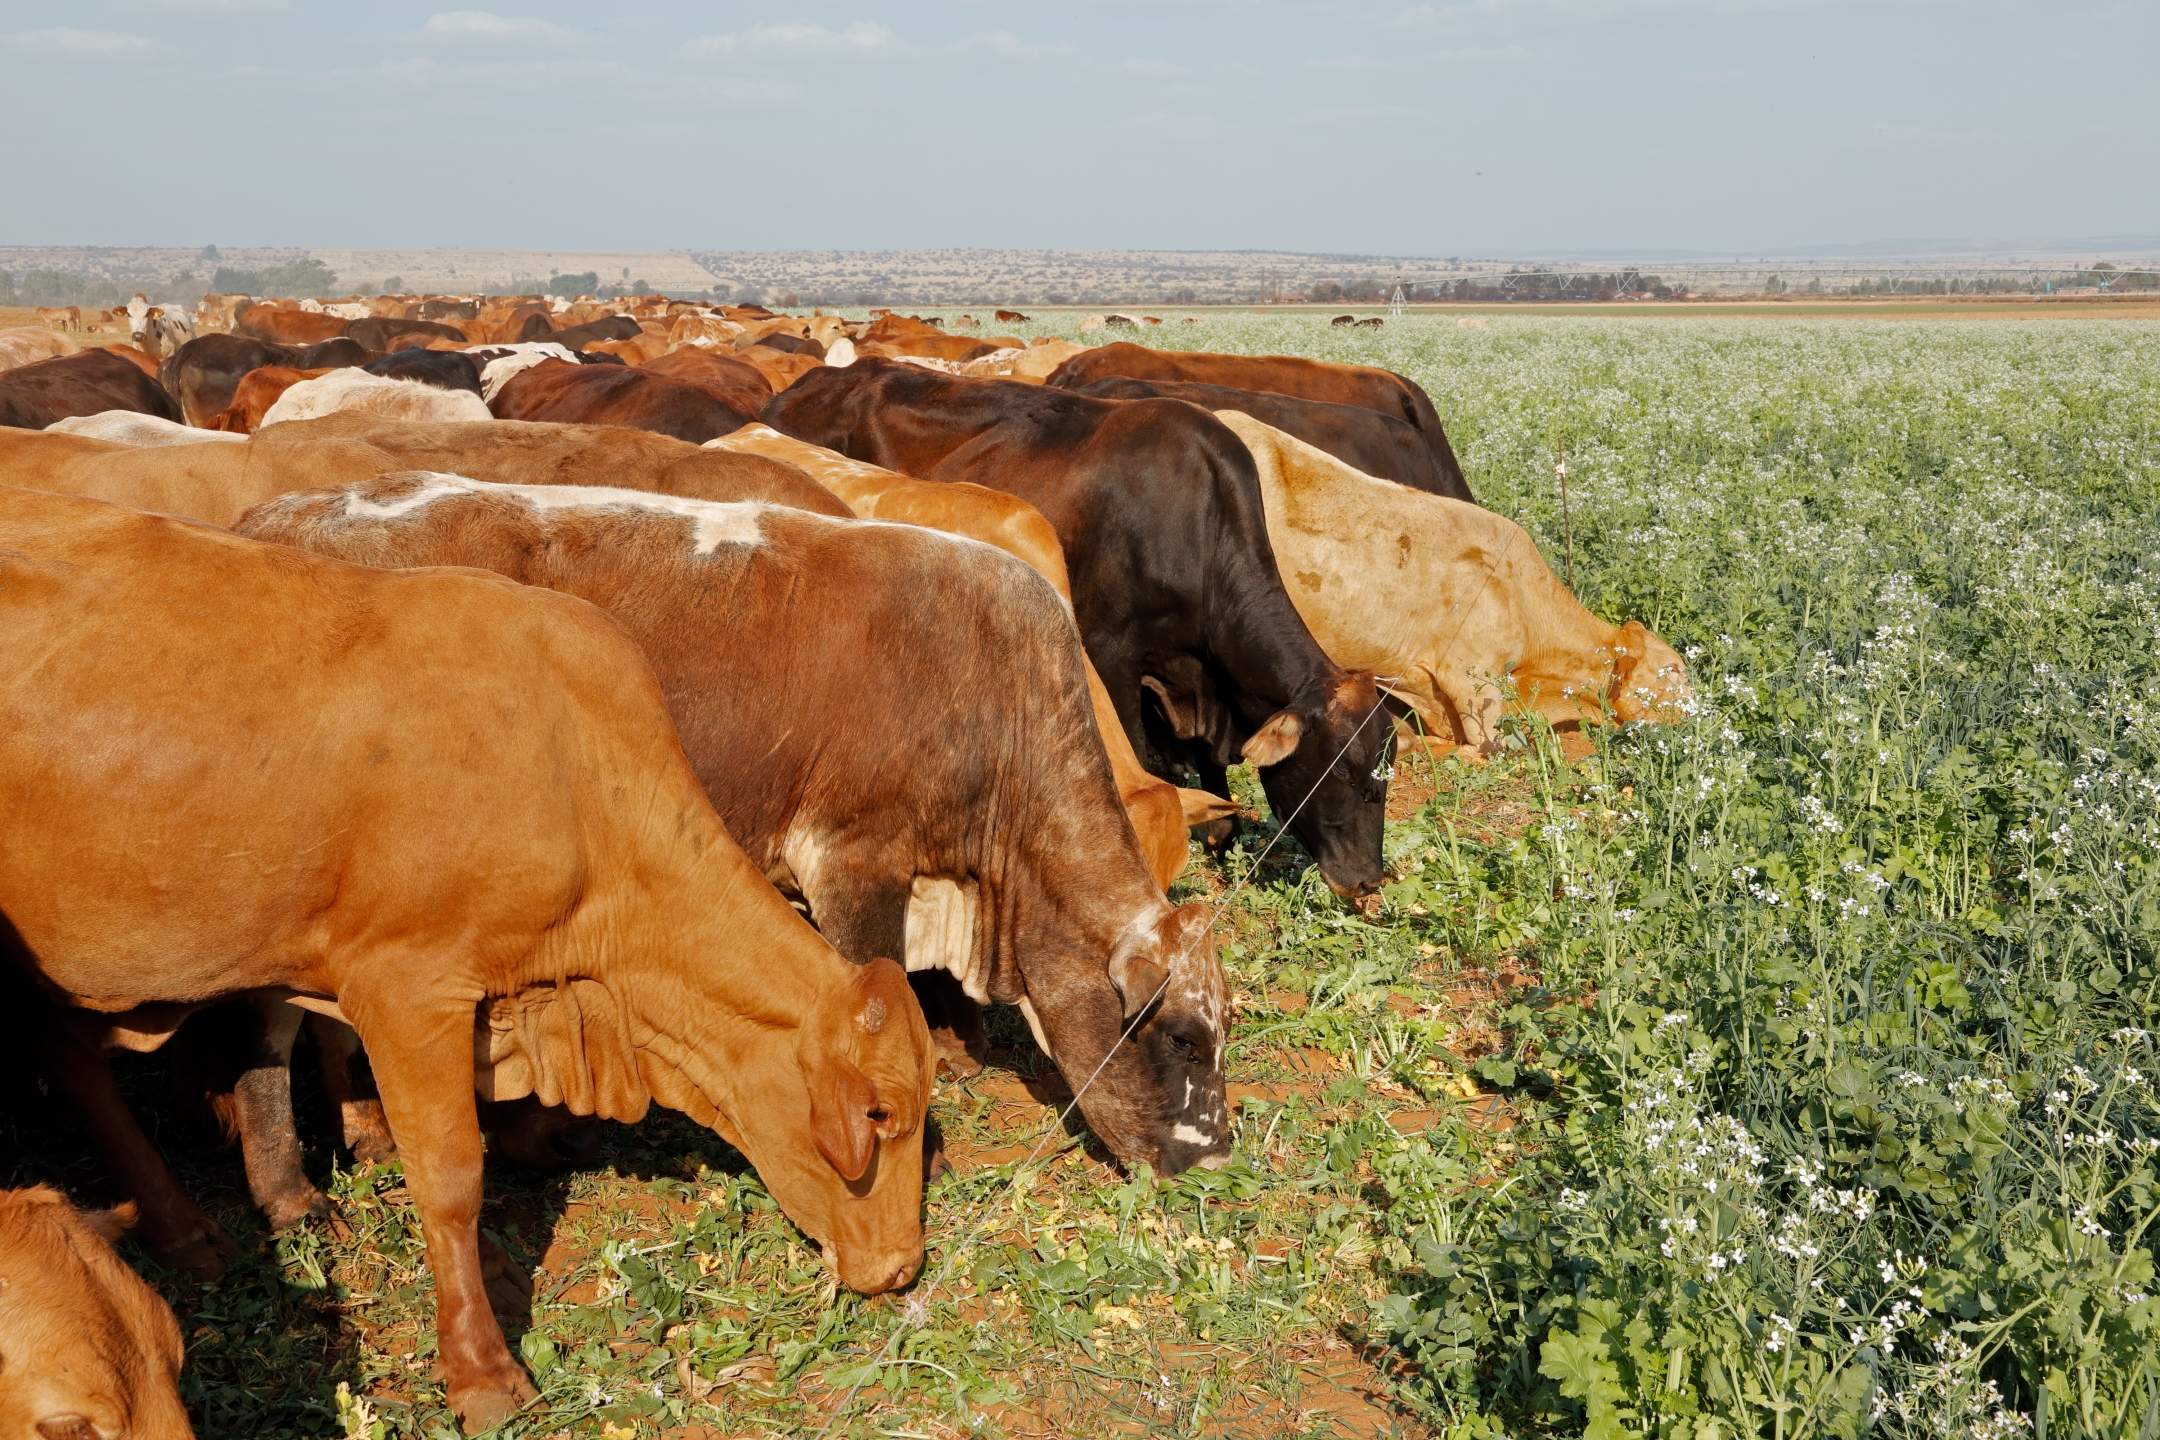 Livestock integration is a key component.